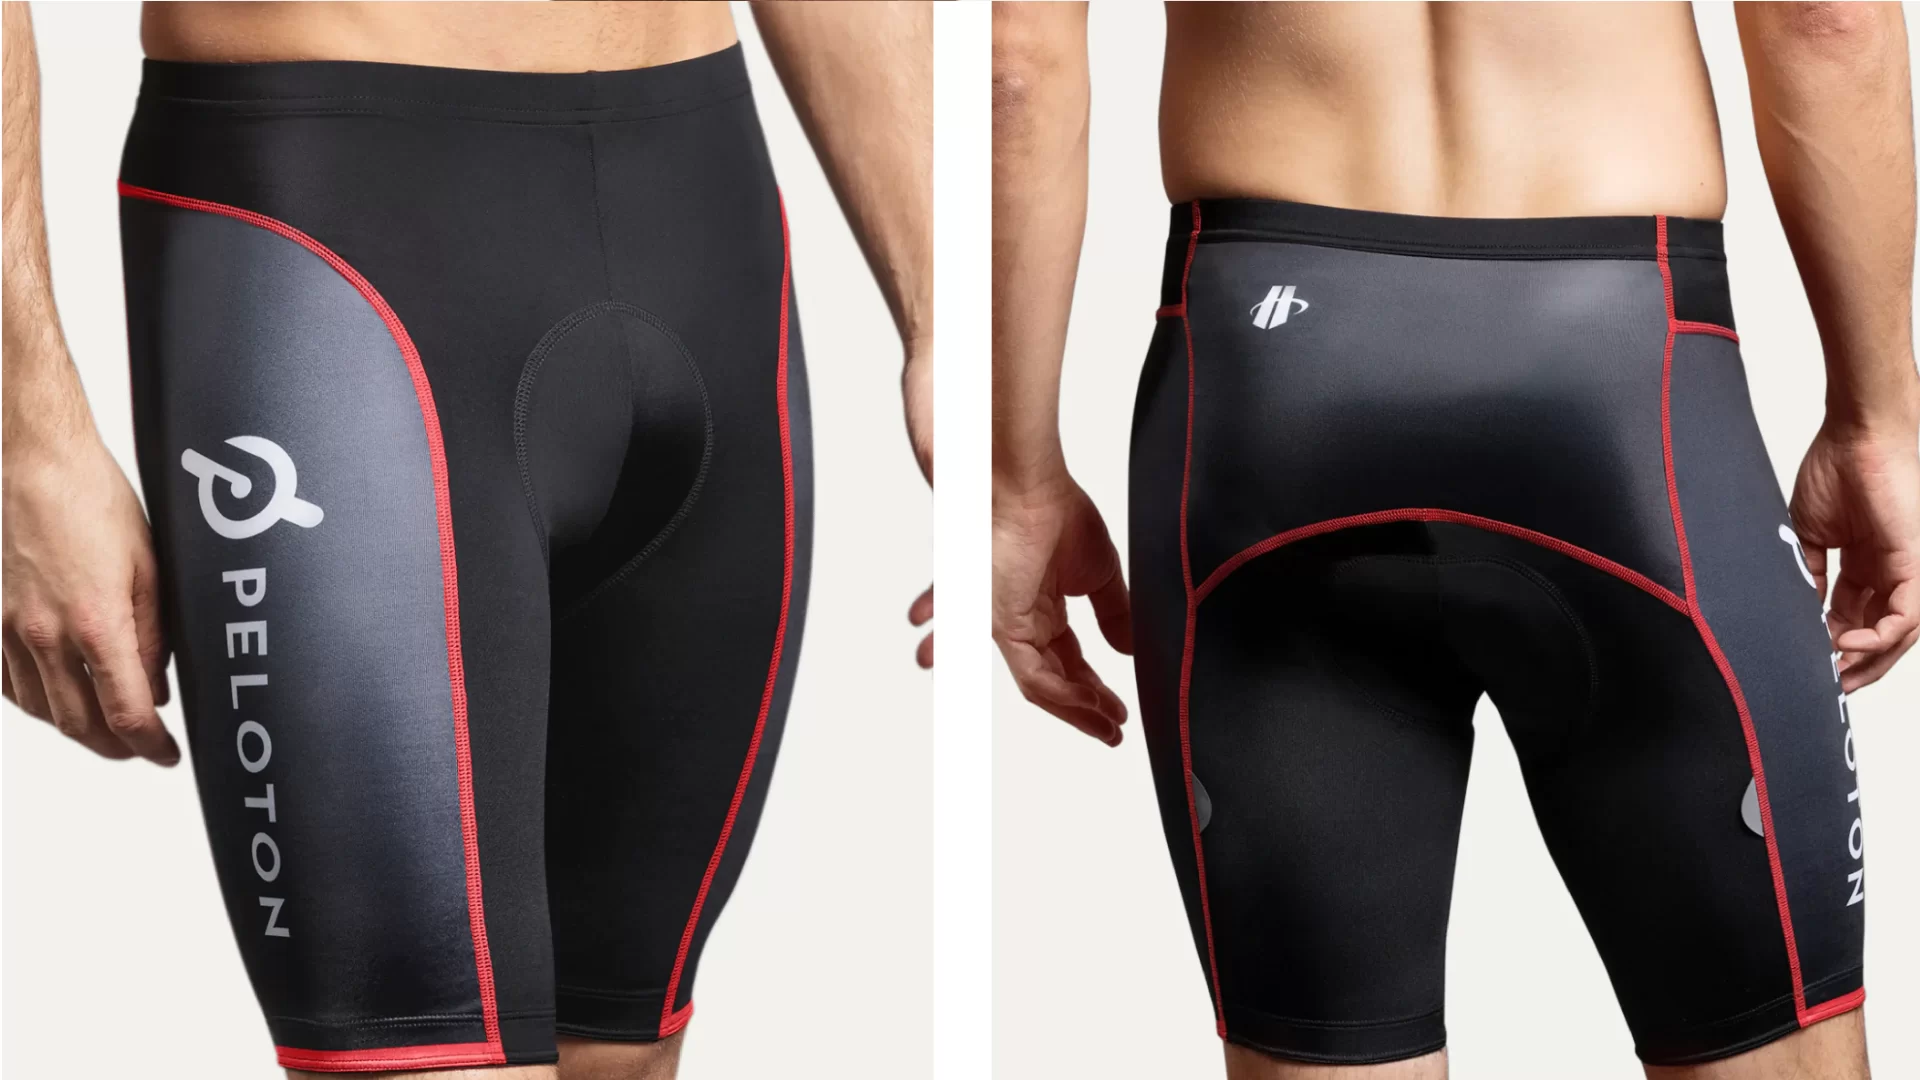 Get Well-Padded Bike Shorts